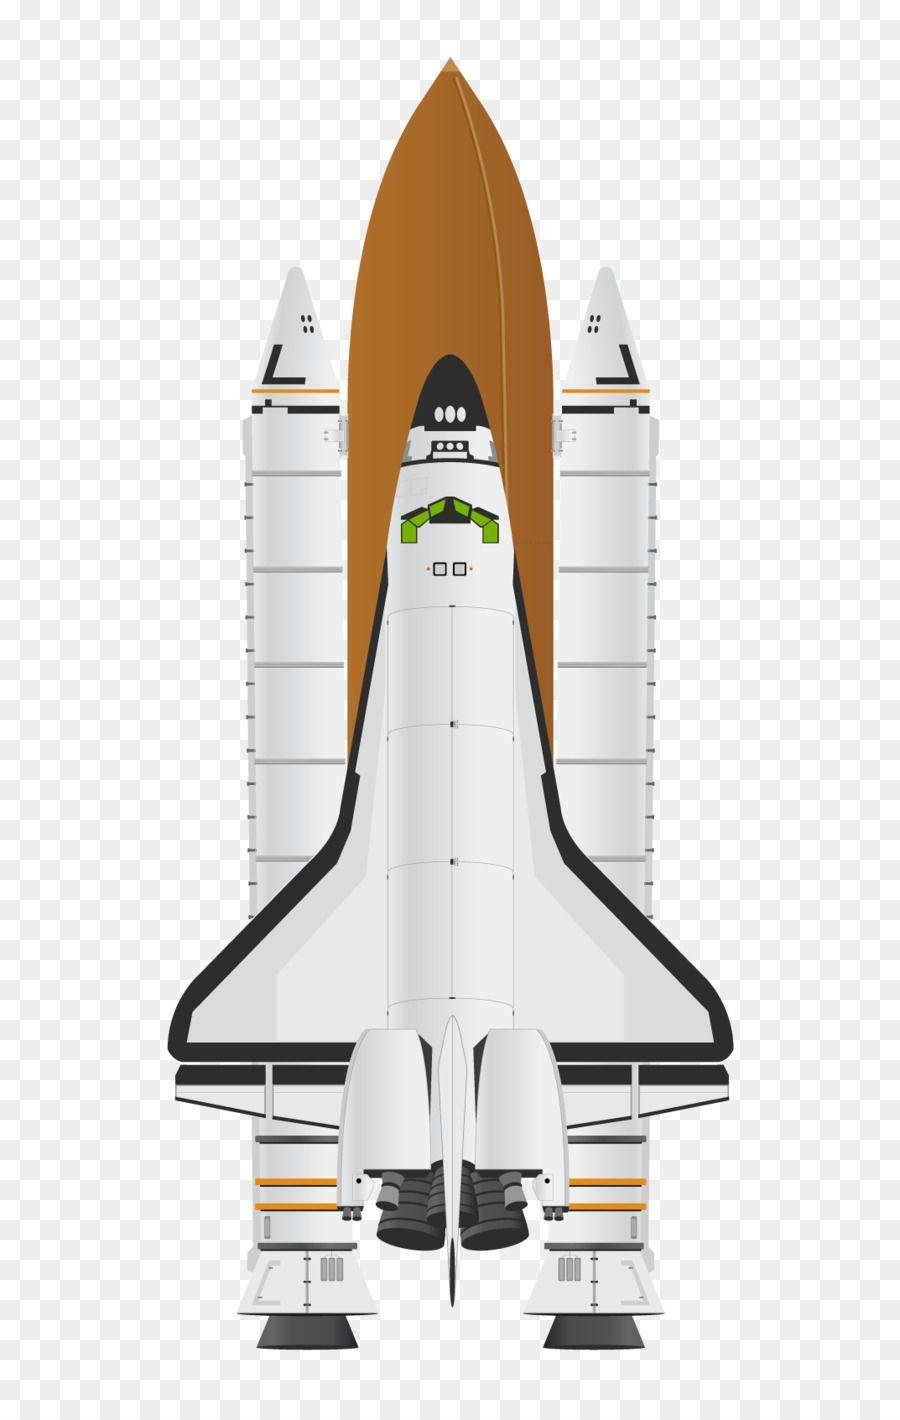 NASA Spaceship Logo - Space Shuttle program Spacecraft NASA png download